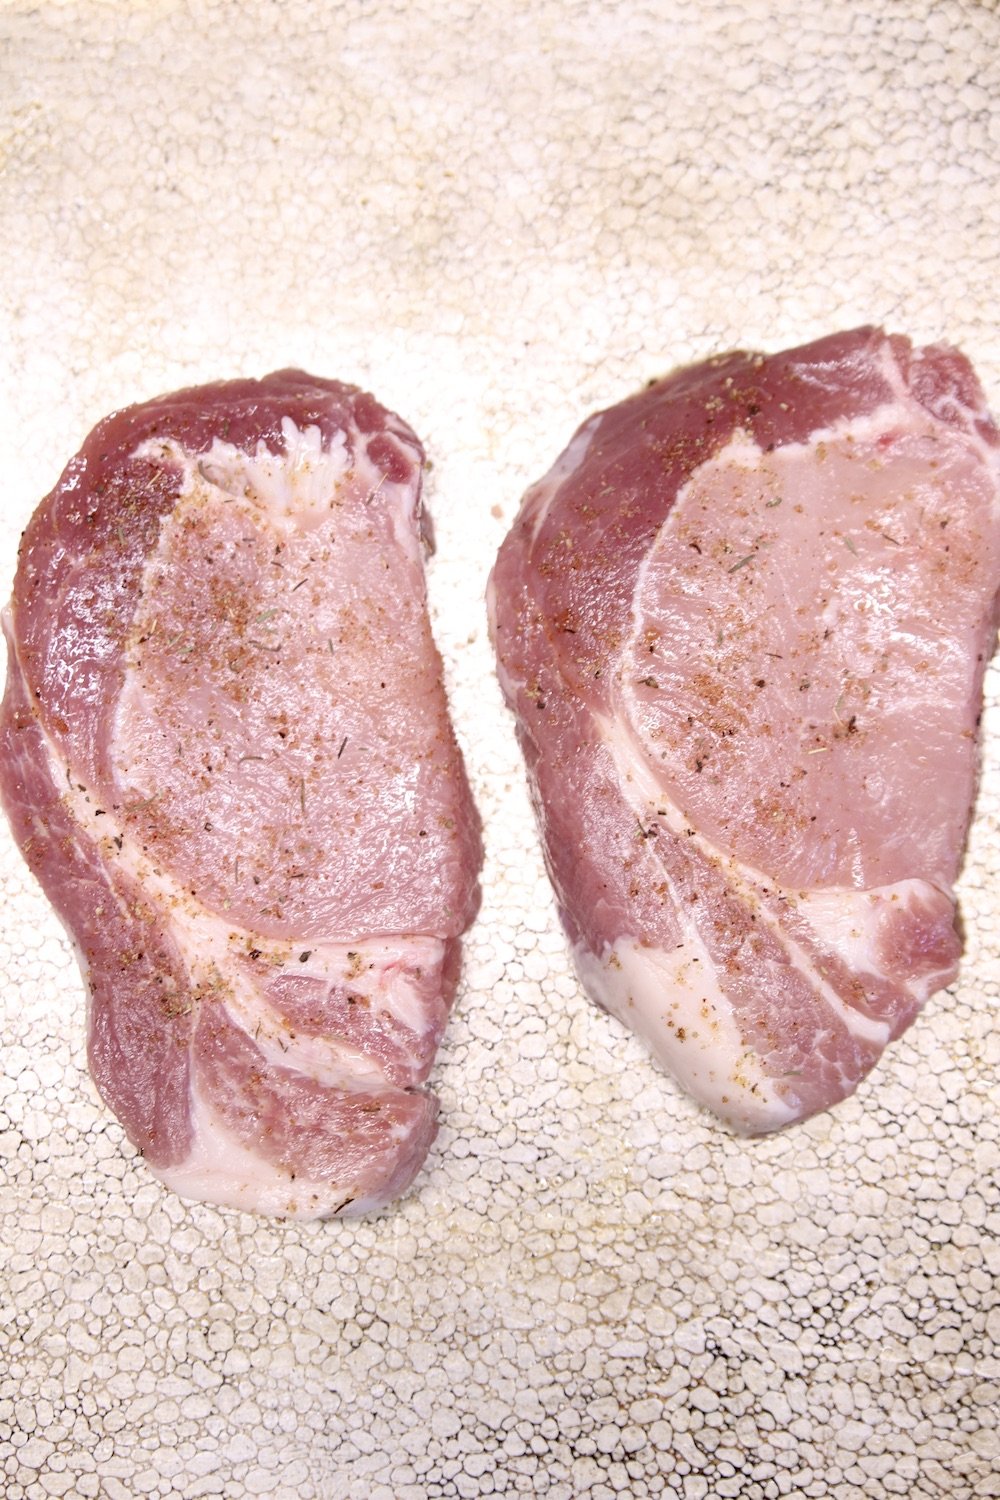 pork chops on a baking sheet seasoned with salt and pepper